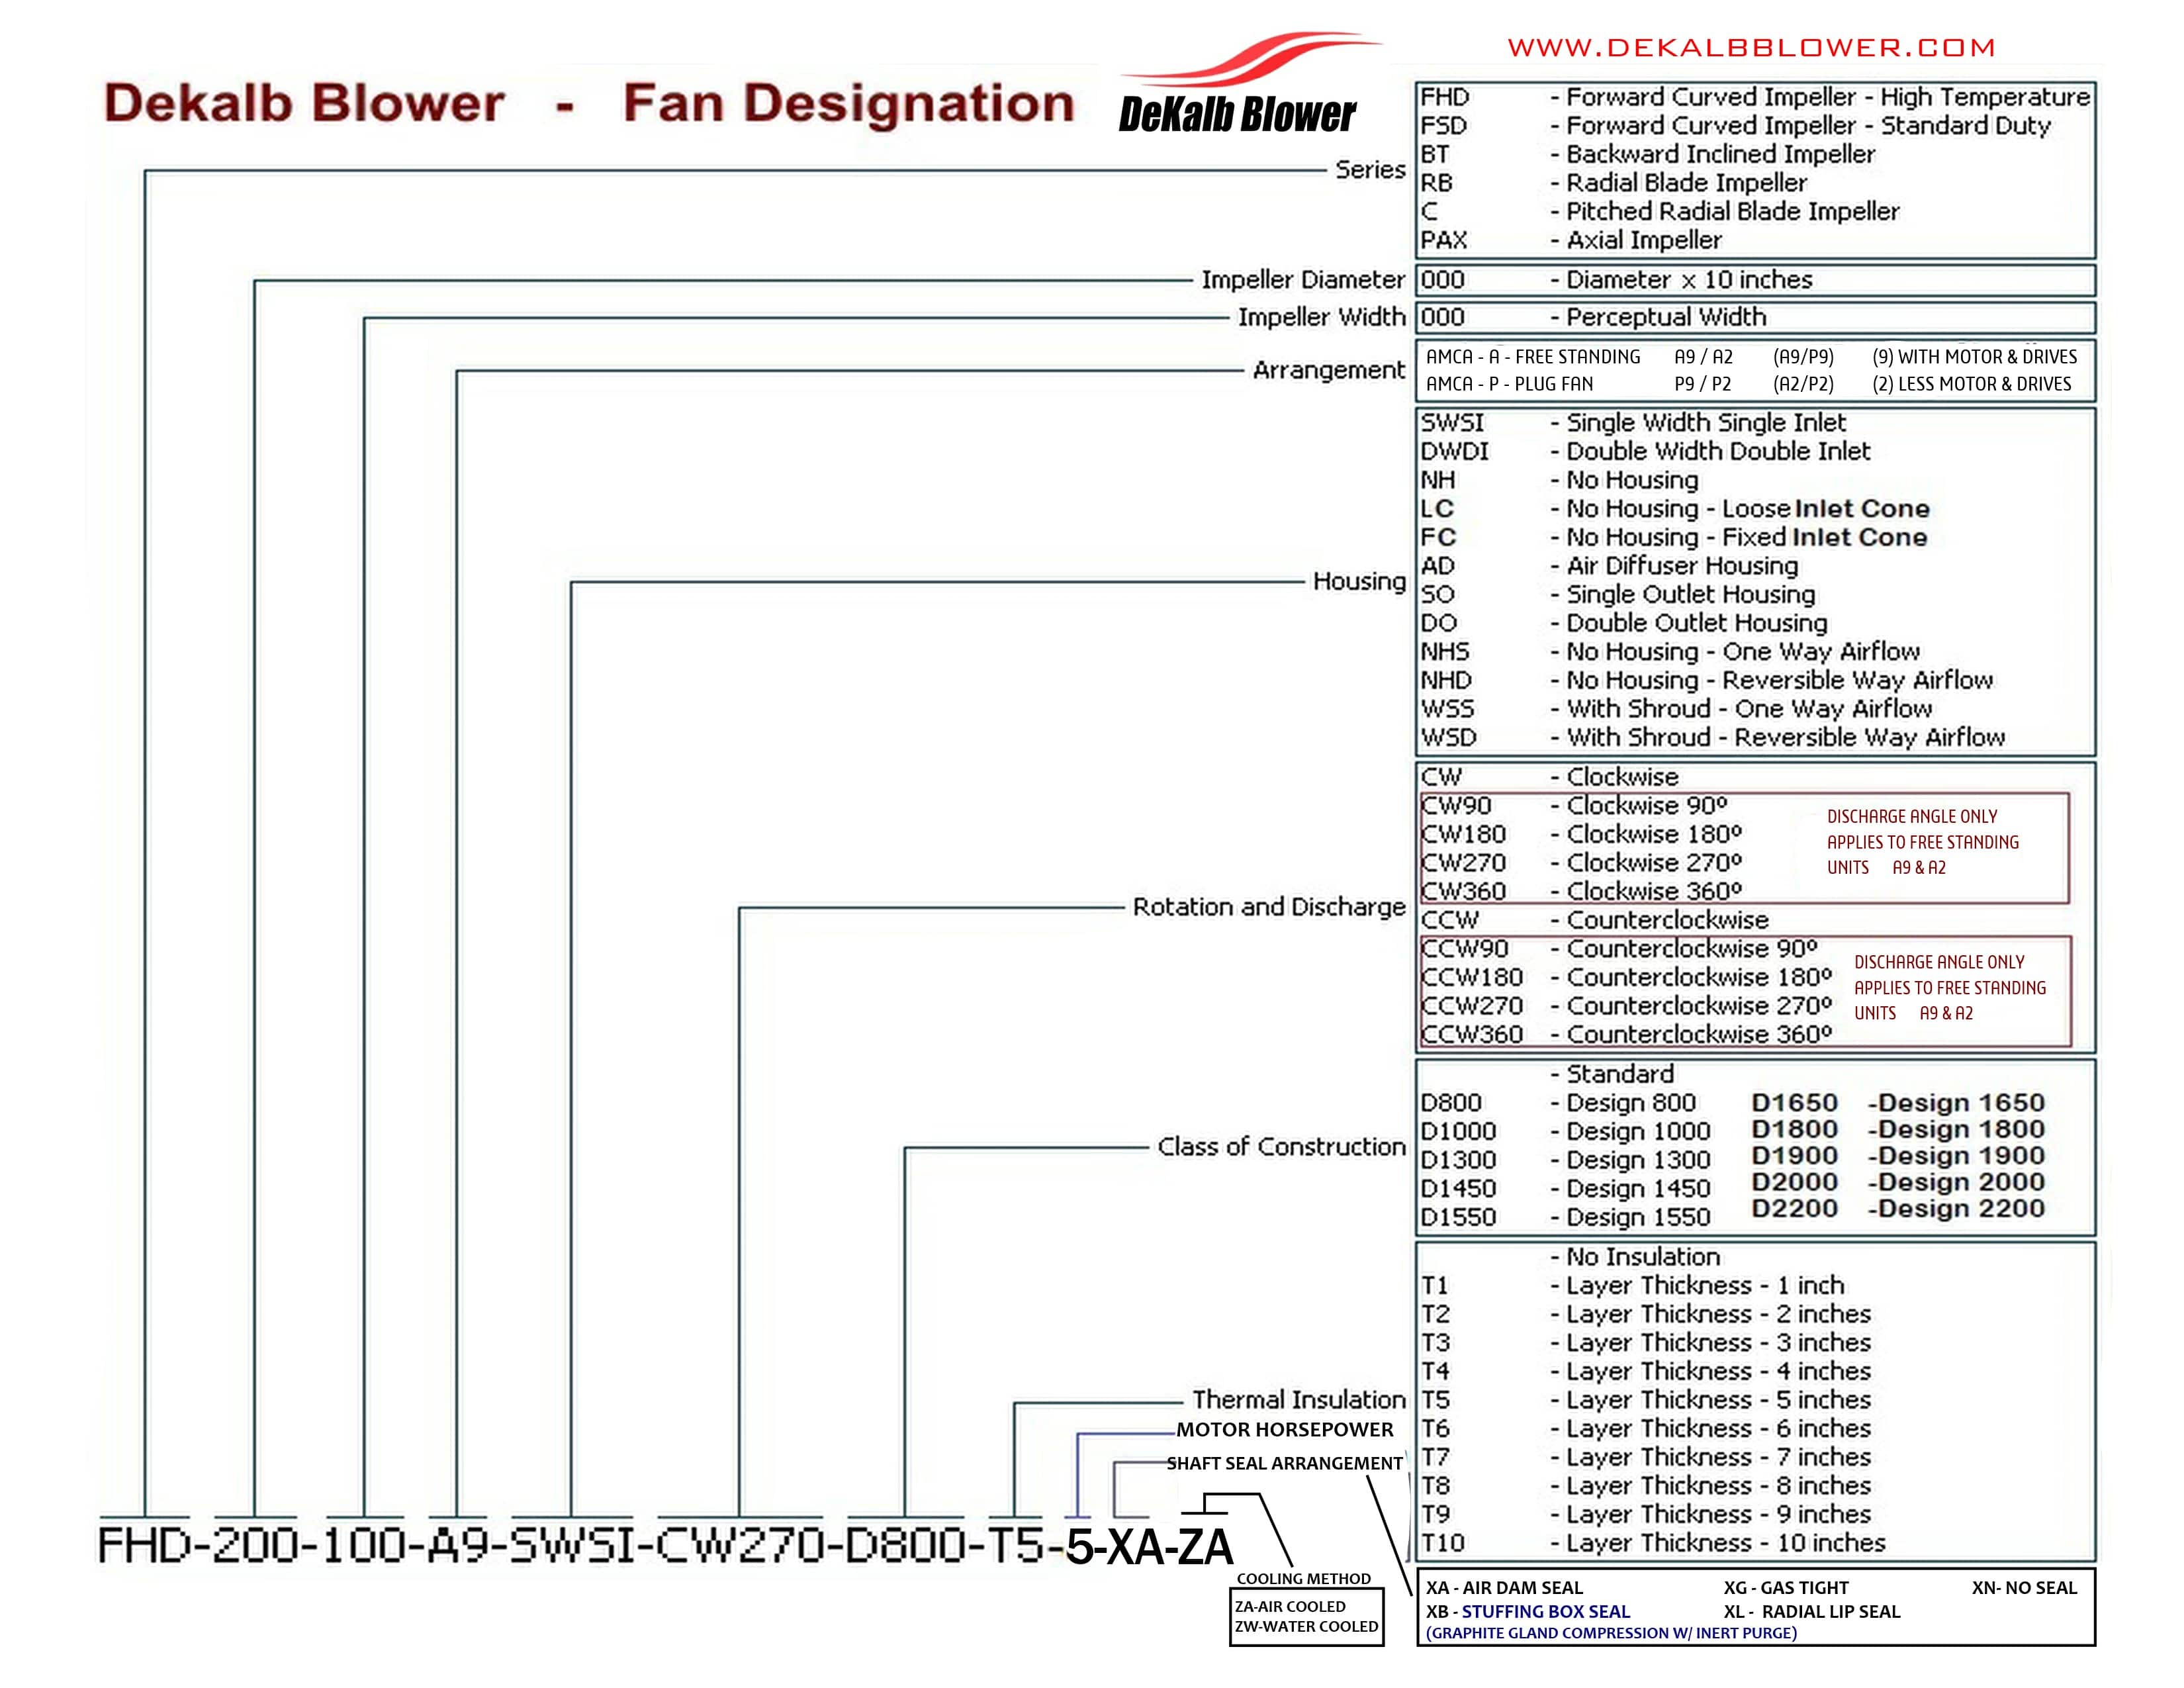 Fan Designation Chart